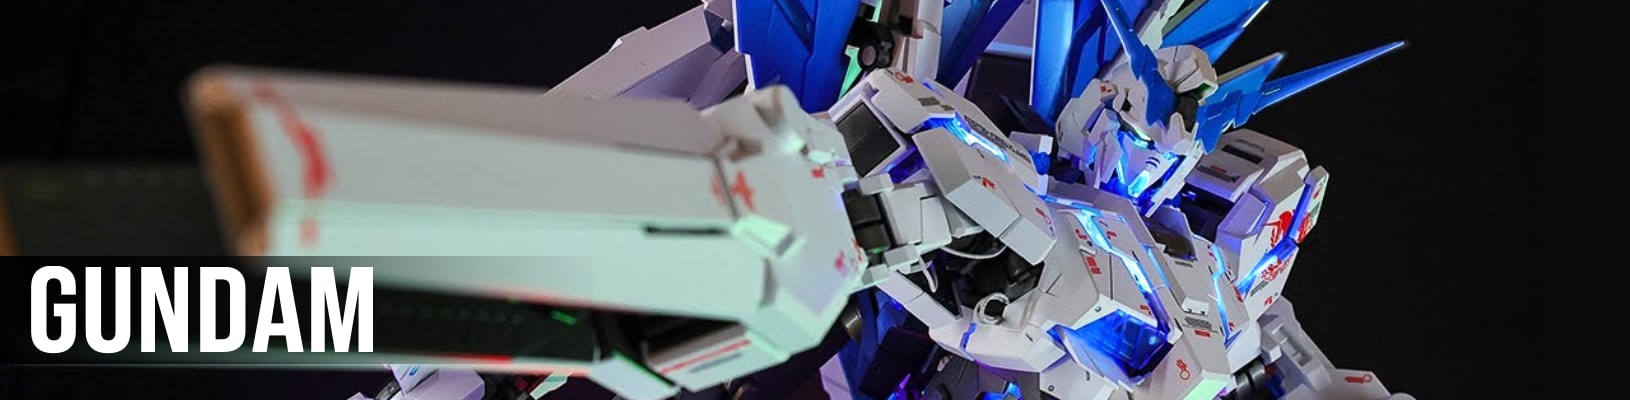 Gundam e Model-kit Tanuki Nerd